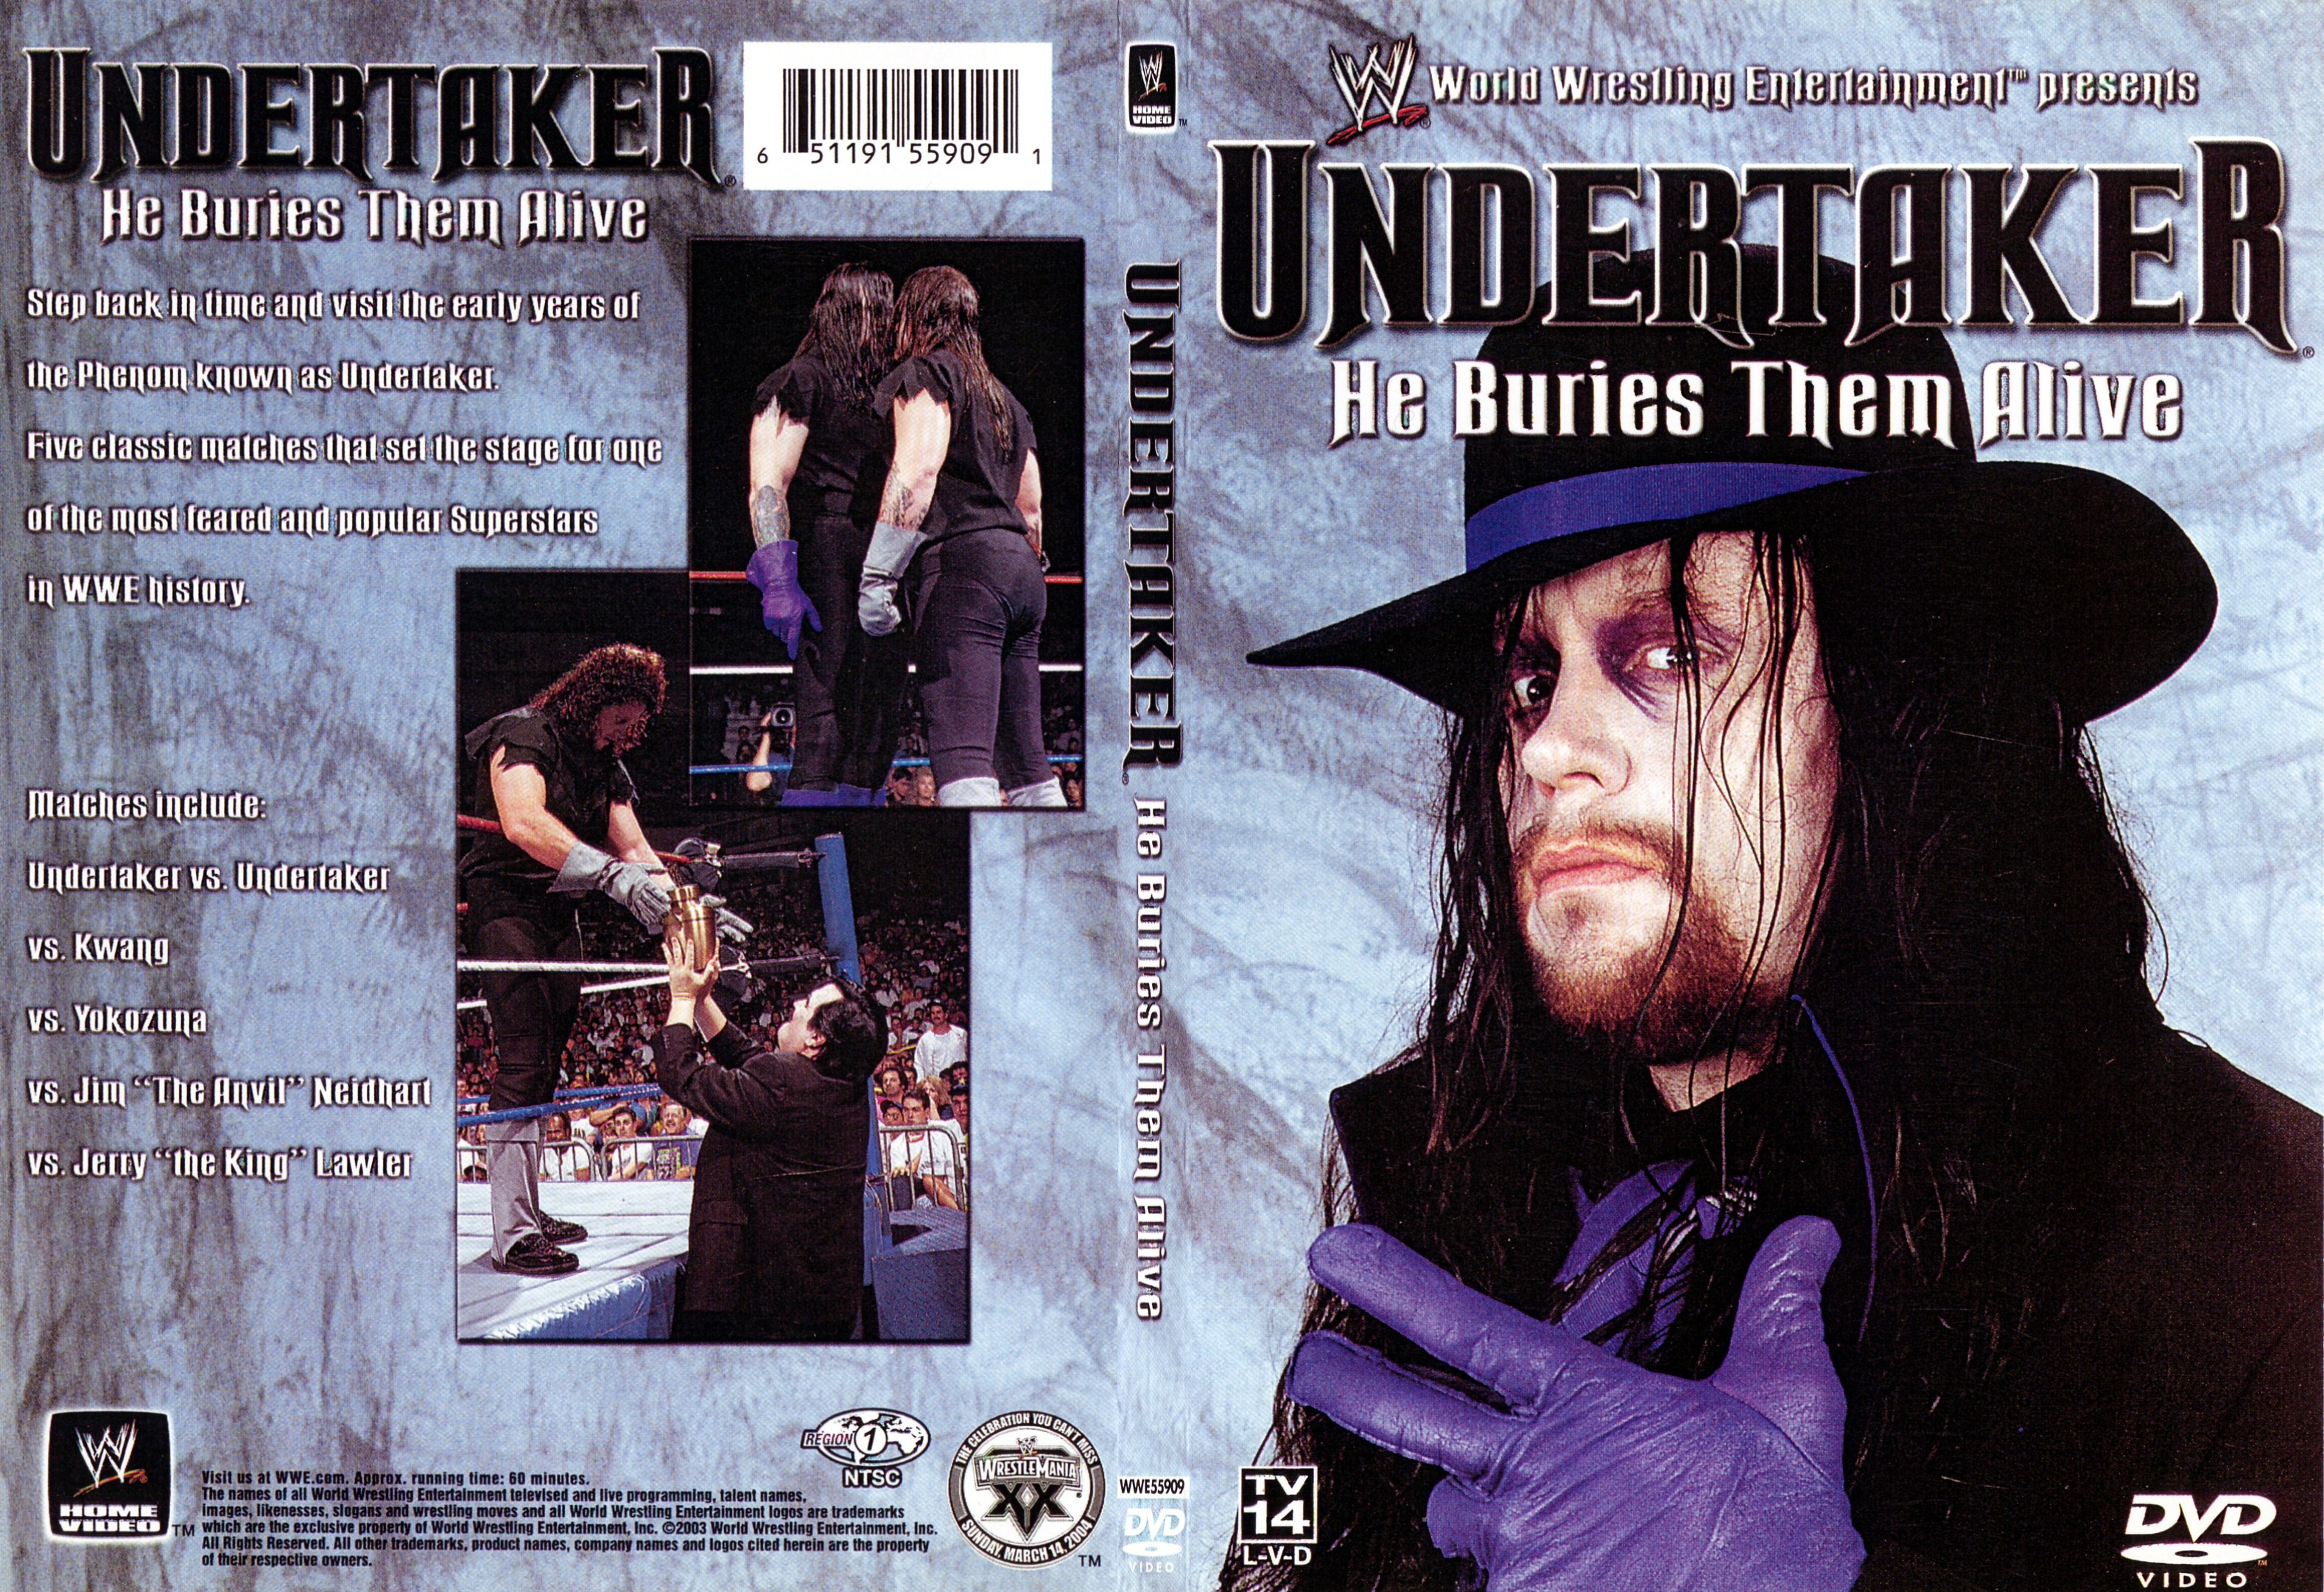 Jaquette DVD Undertaker He buries them alive - SLIM